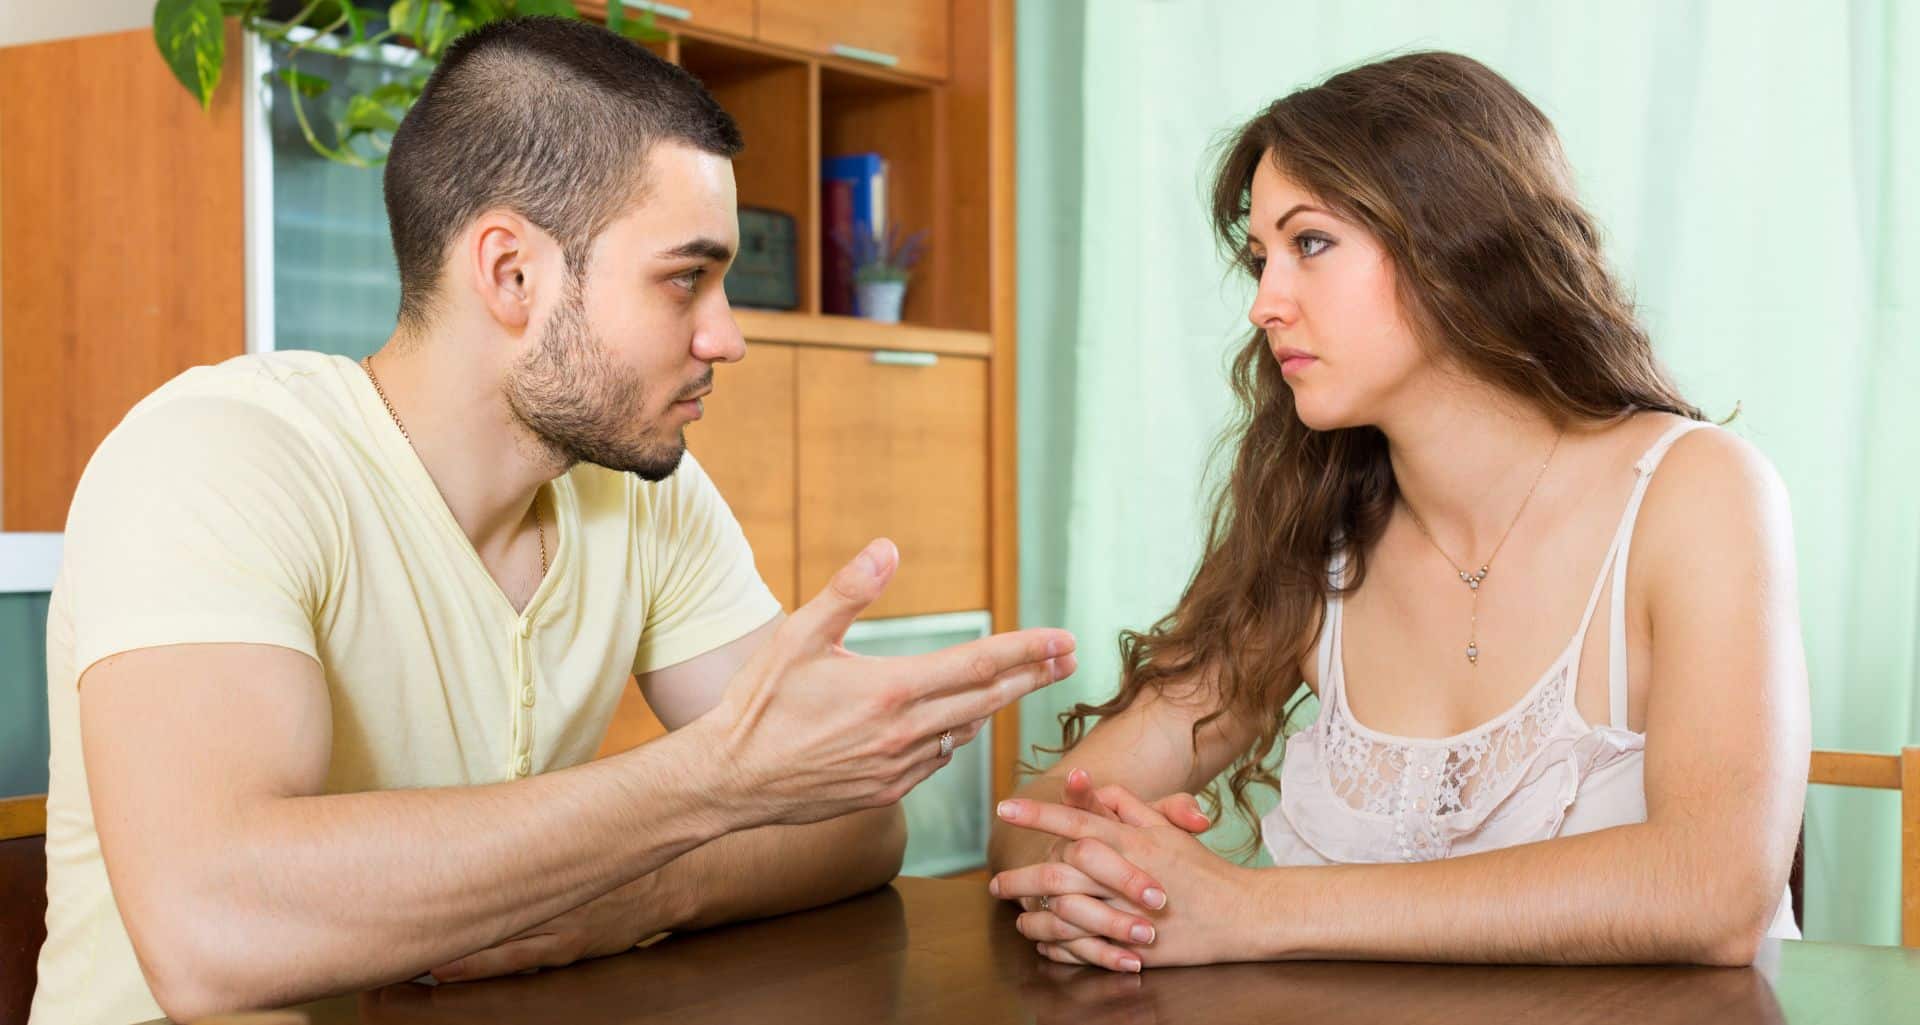 Discussões entre casal- casal brigando, relacionamento